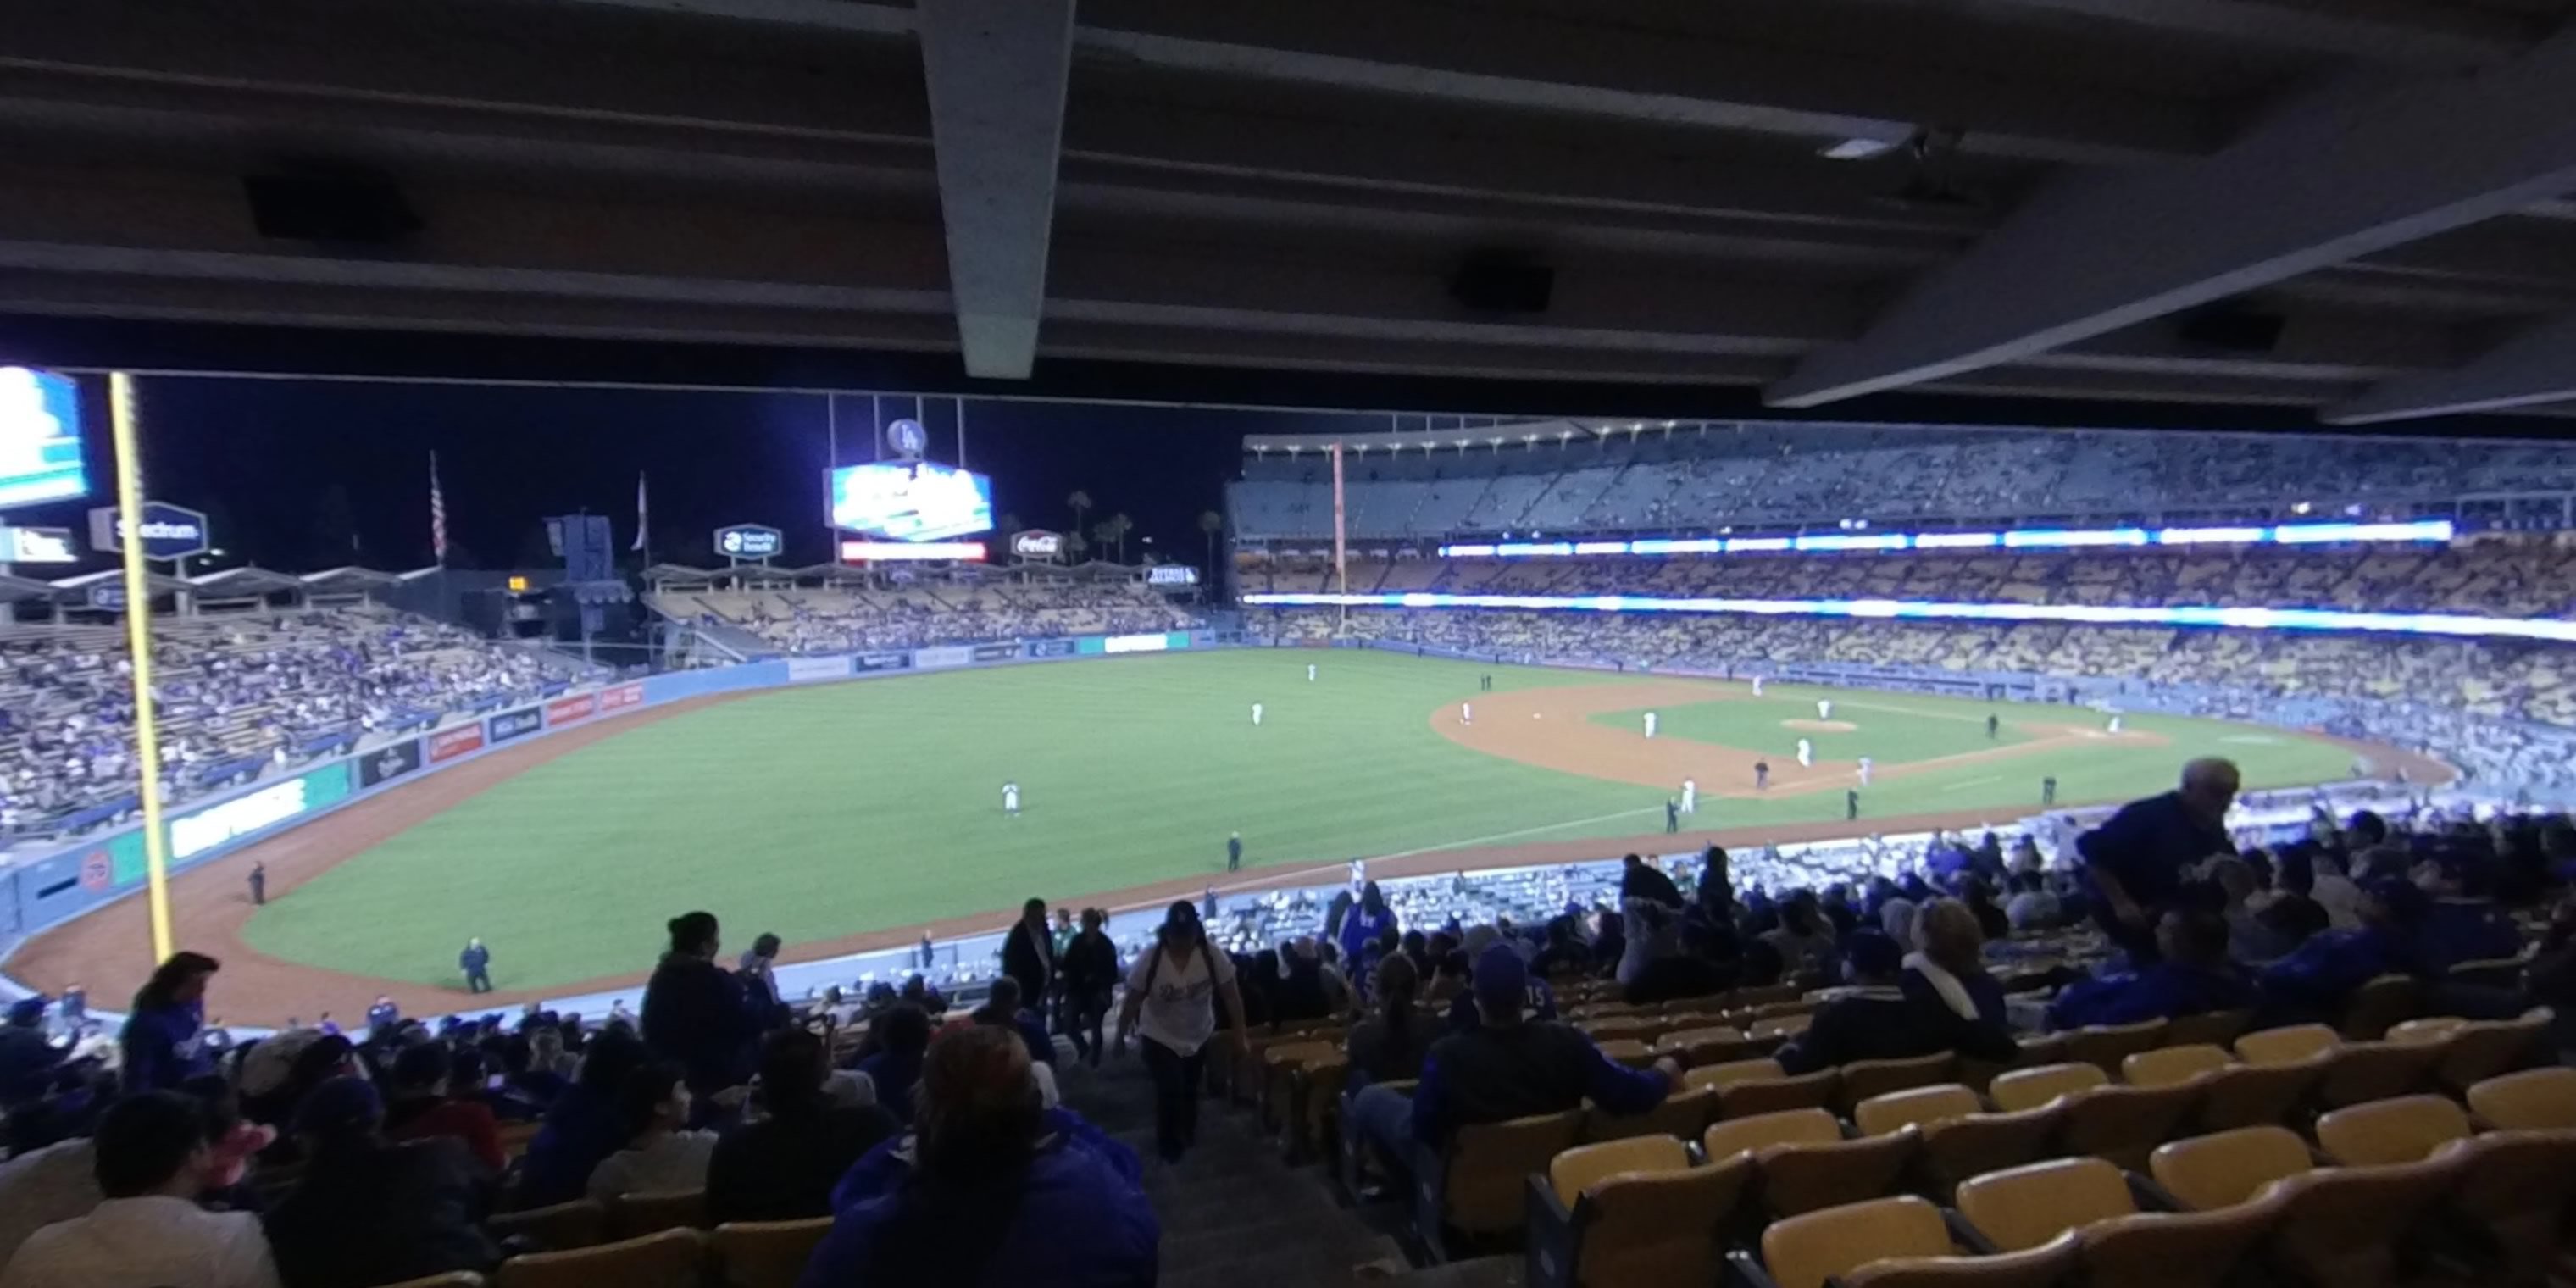 section 153 panoramic seat view  - dodger stadium